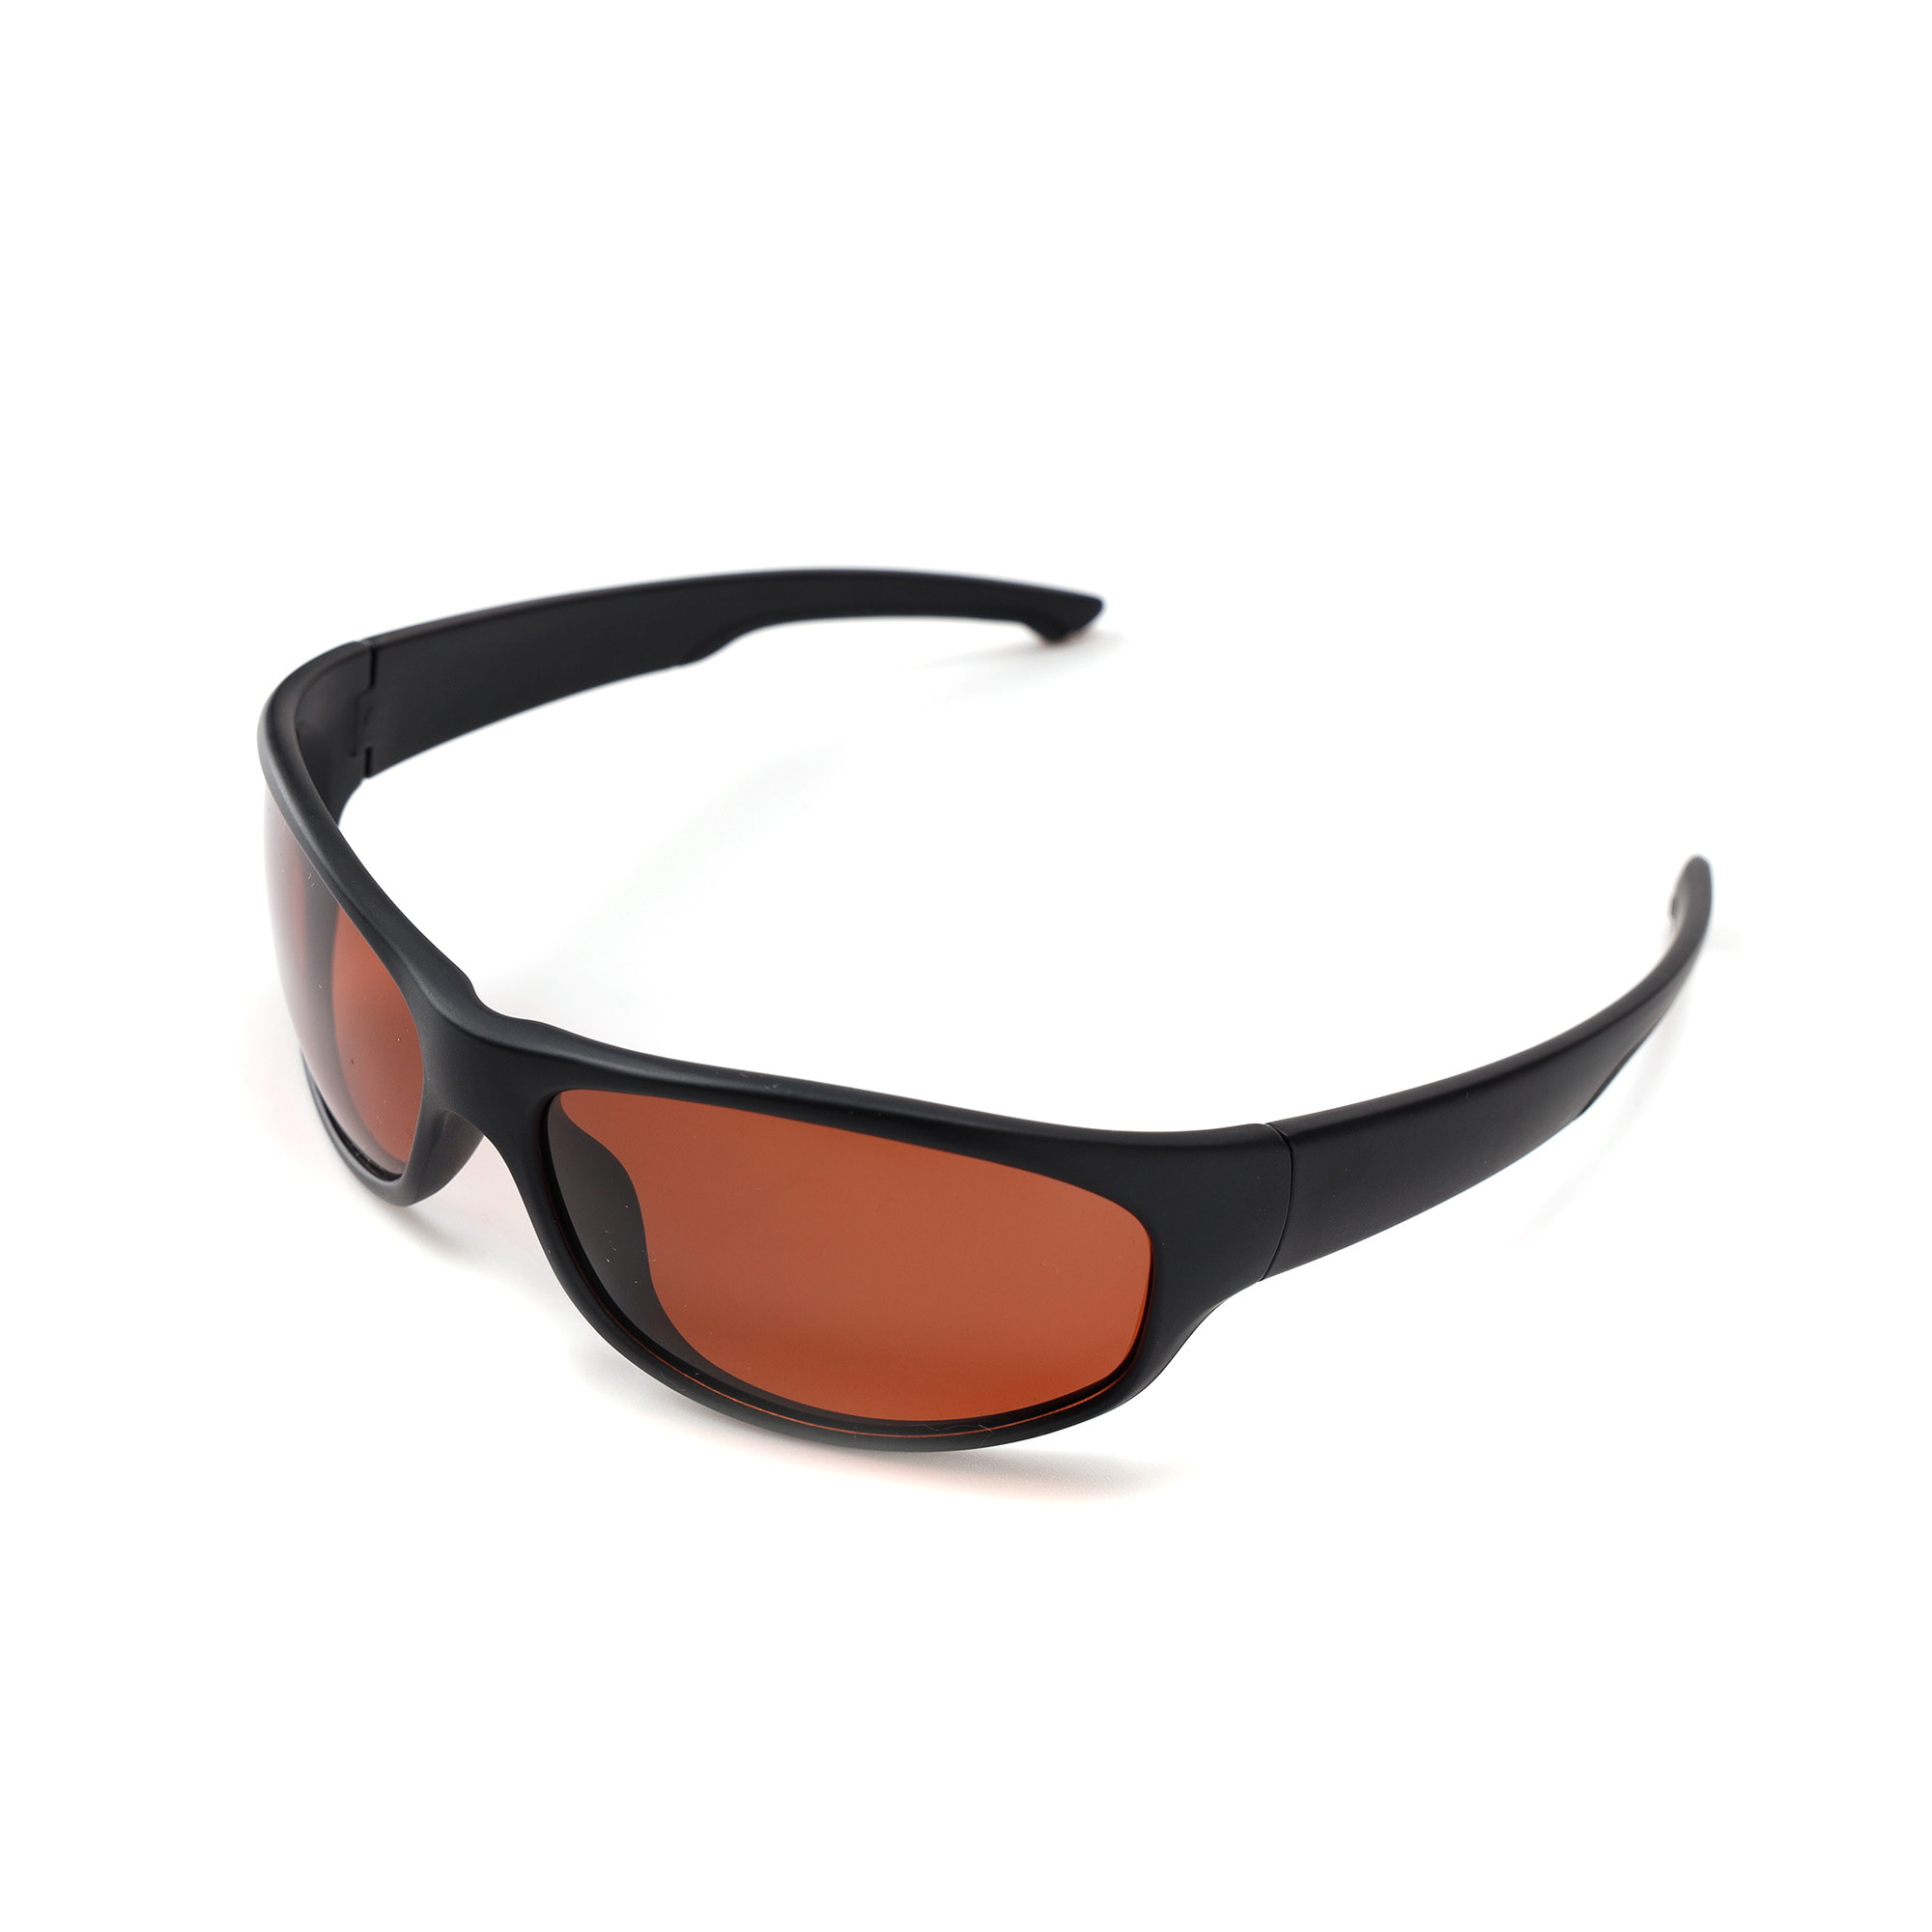 Outdoor Fl-41 Sunglasses